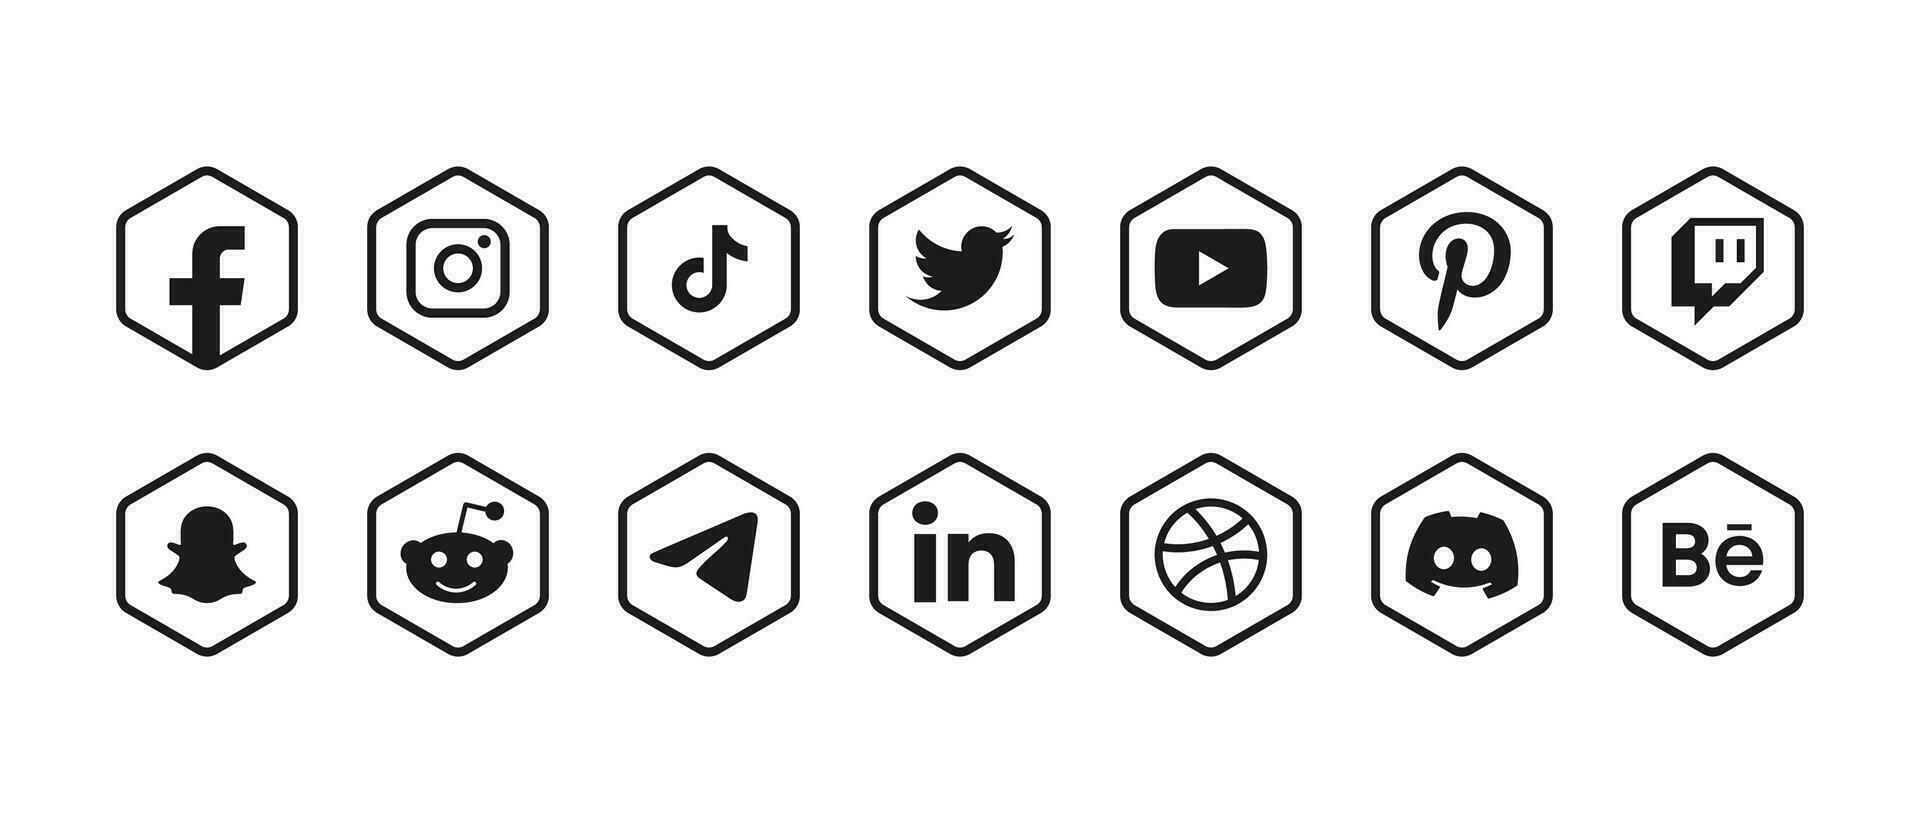 Popular social network symbols, social media logo icons collection vector